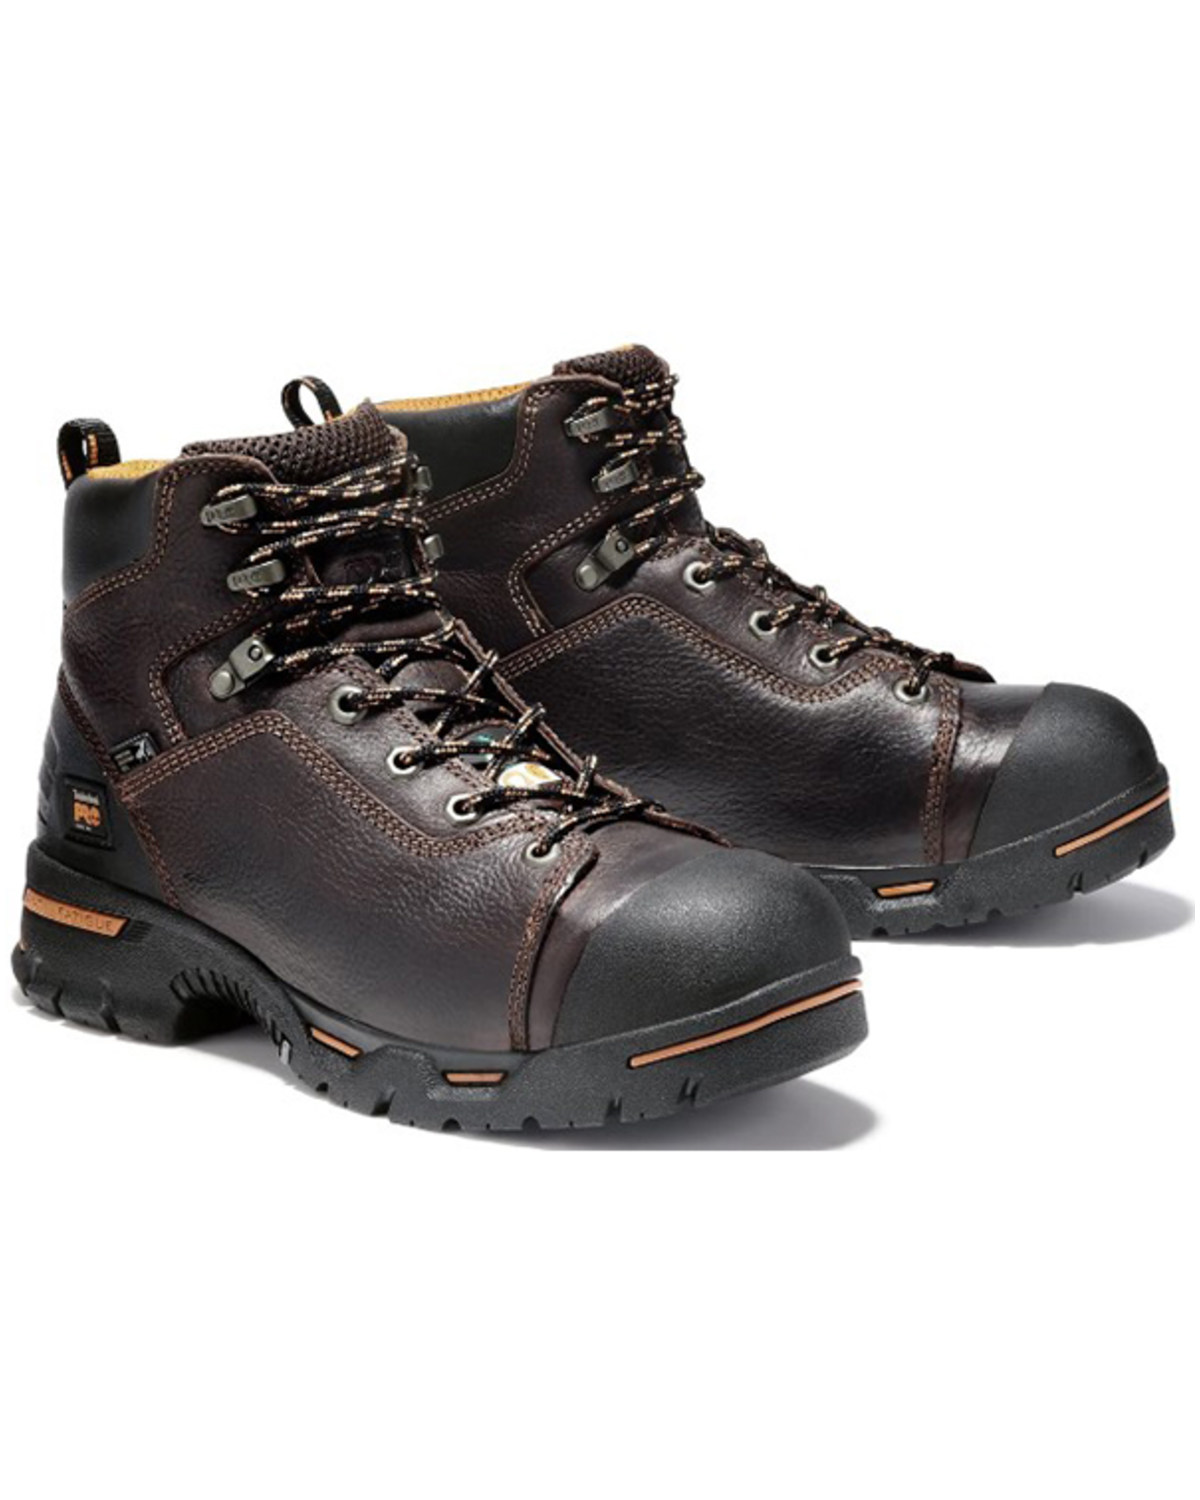 Timberland Men's 6" Endurance Waterproof Work Boots - Steel Toe